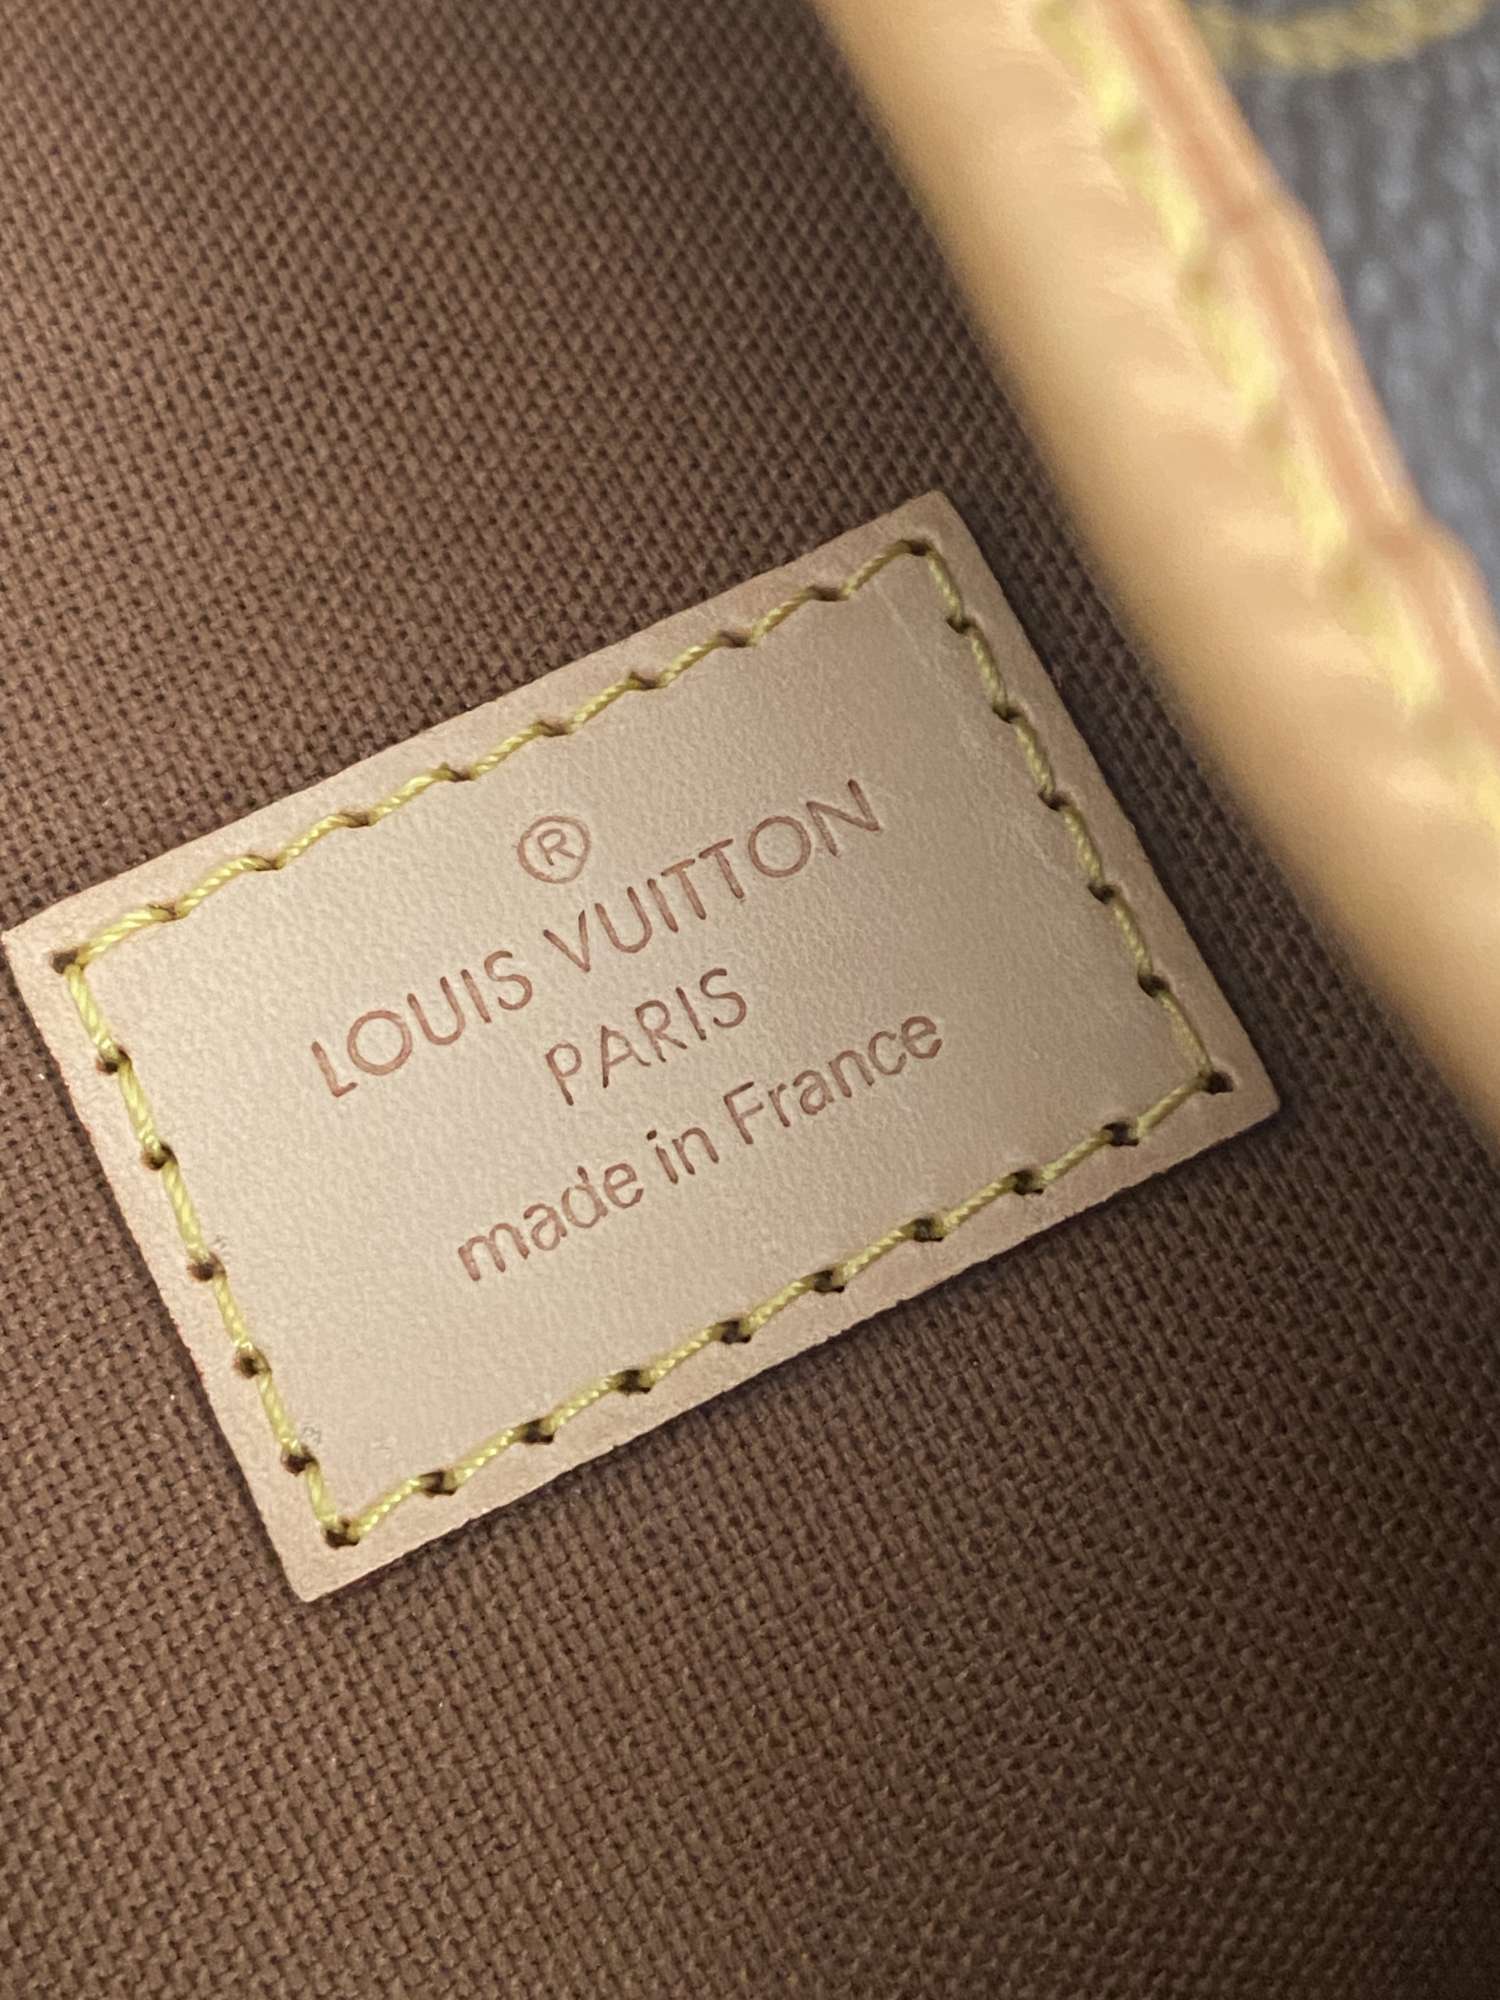 Louis Vuitton ruksak